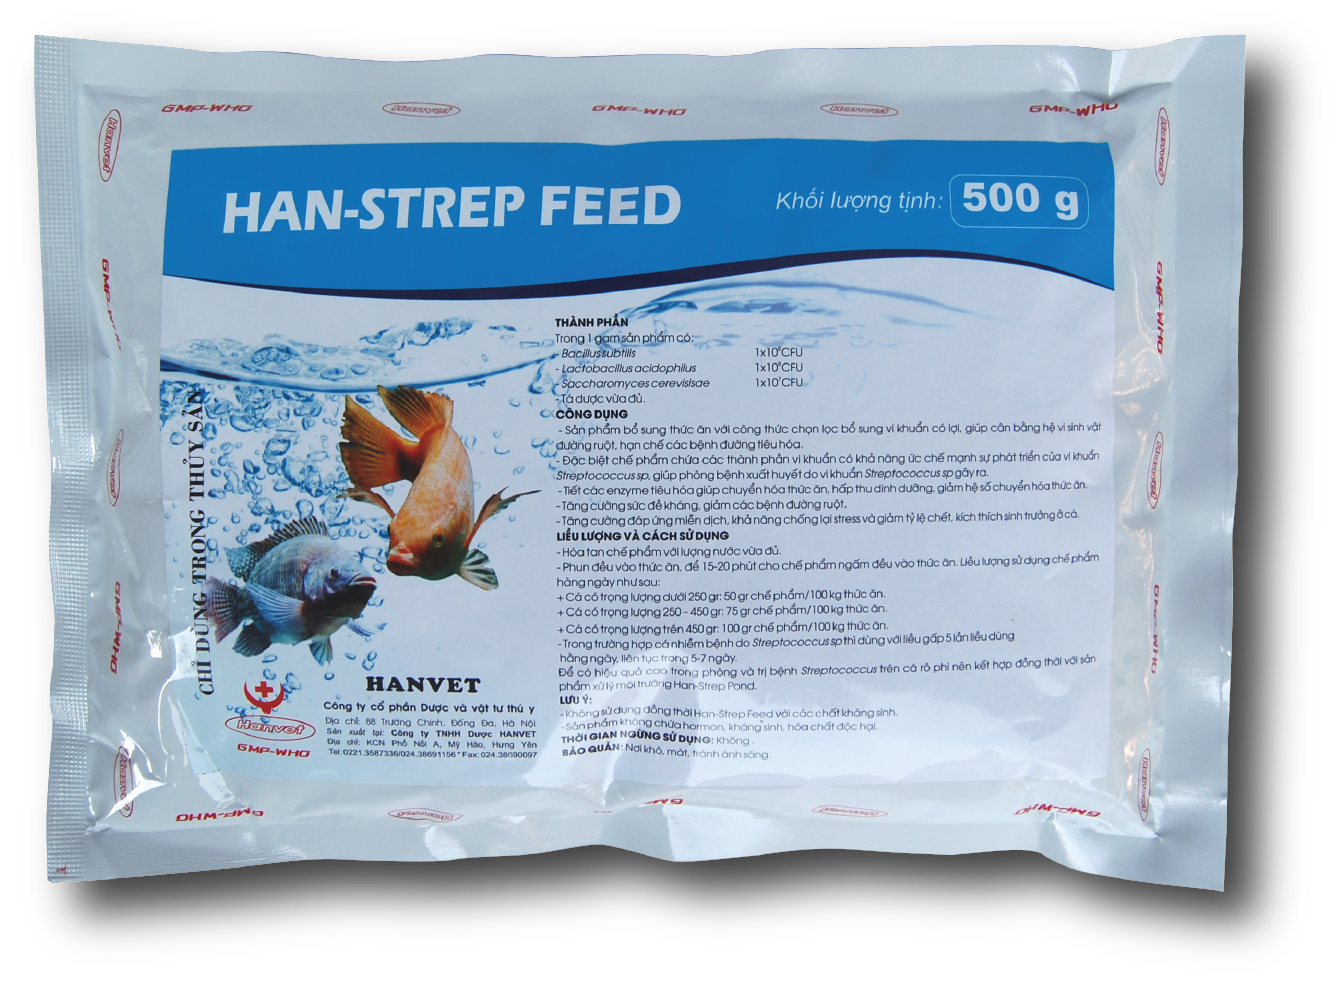 HAN-STREP FEED